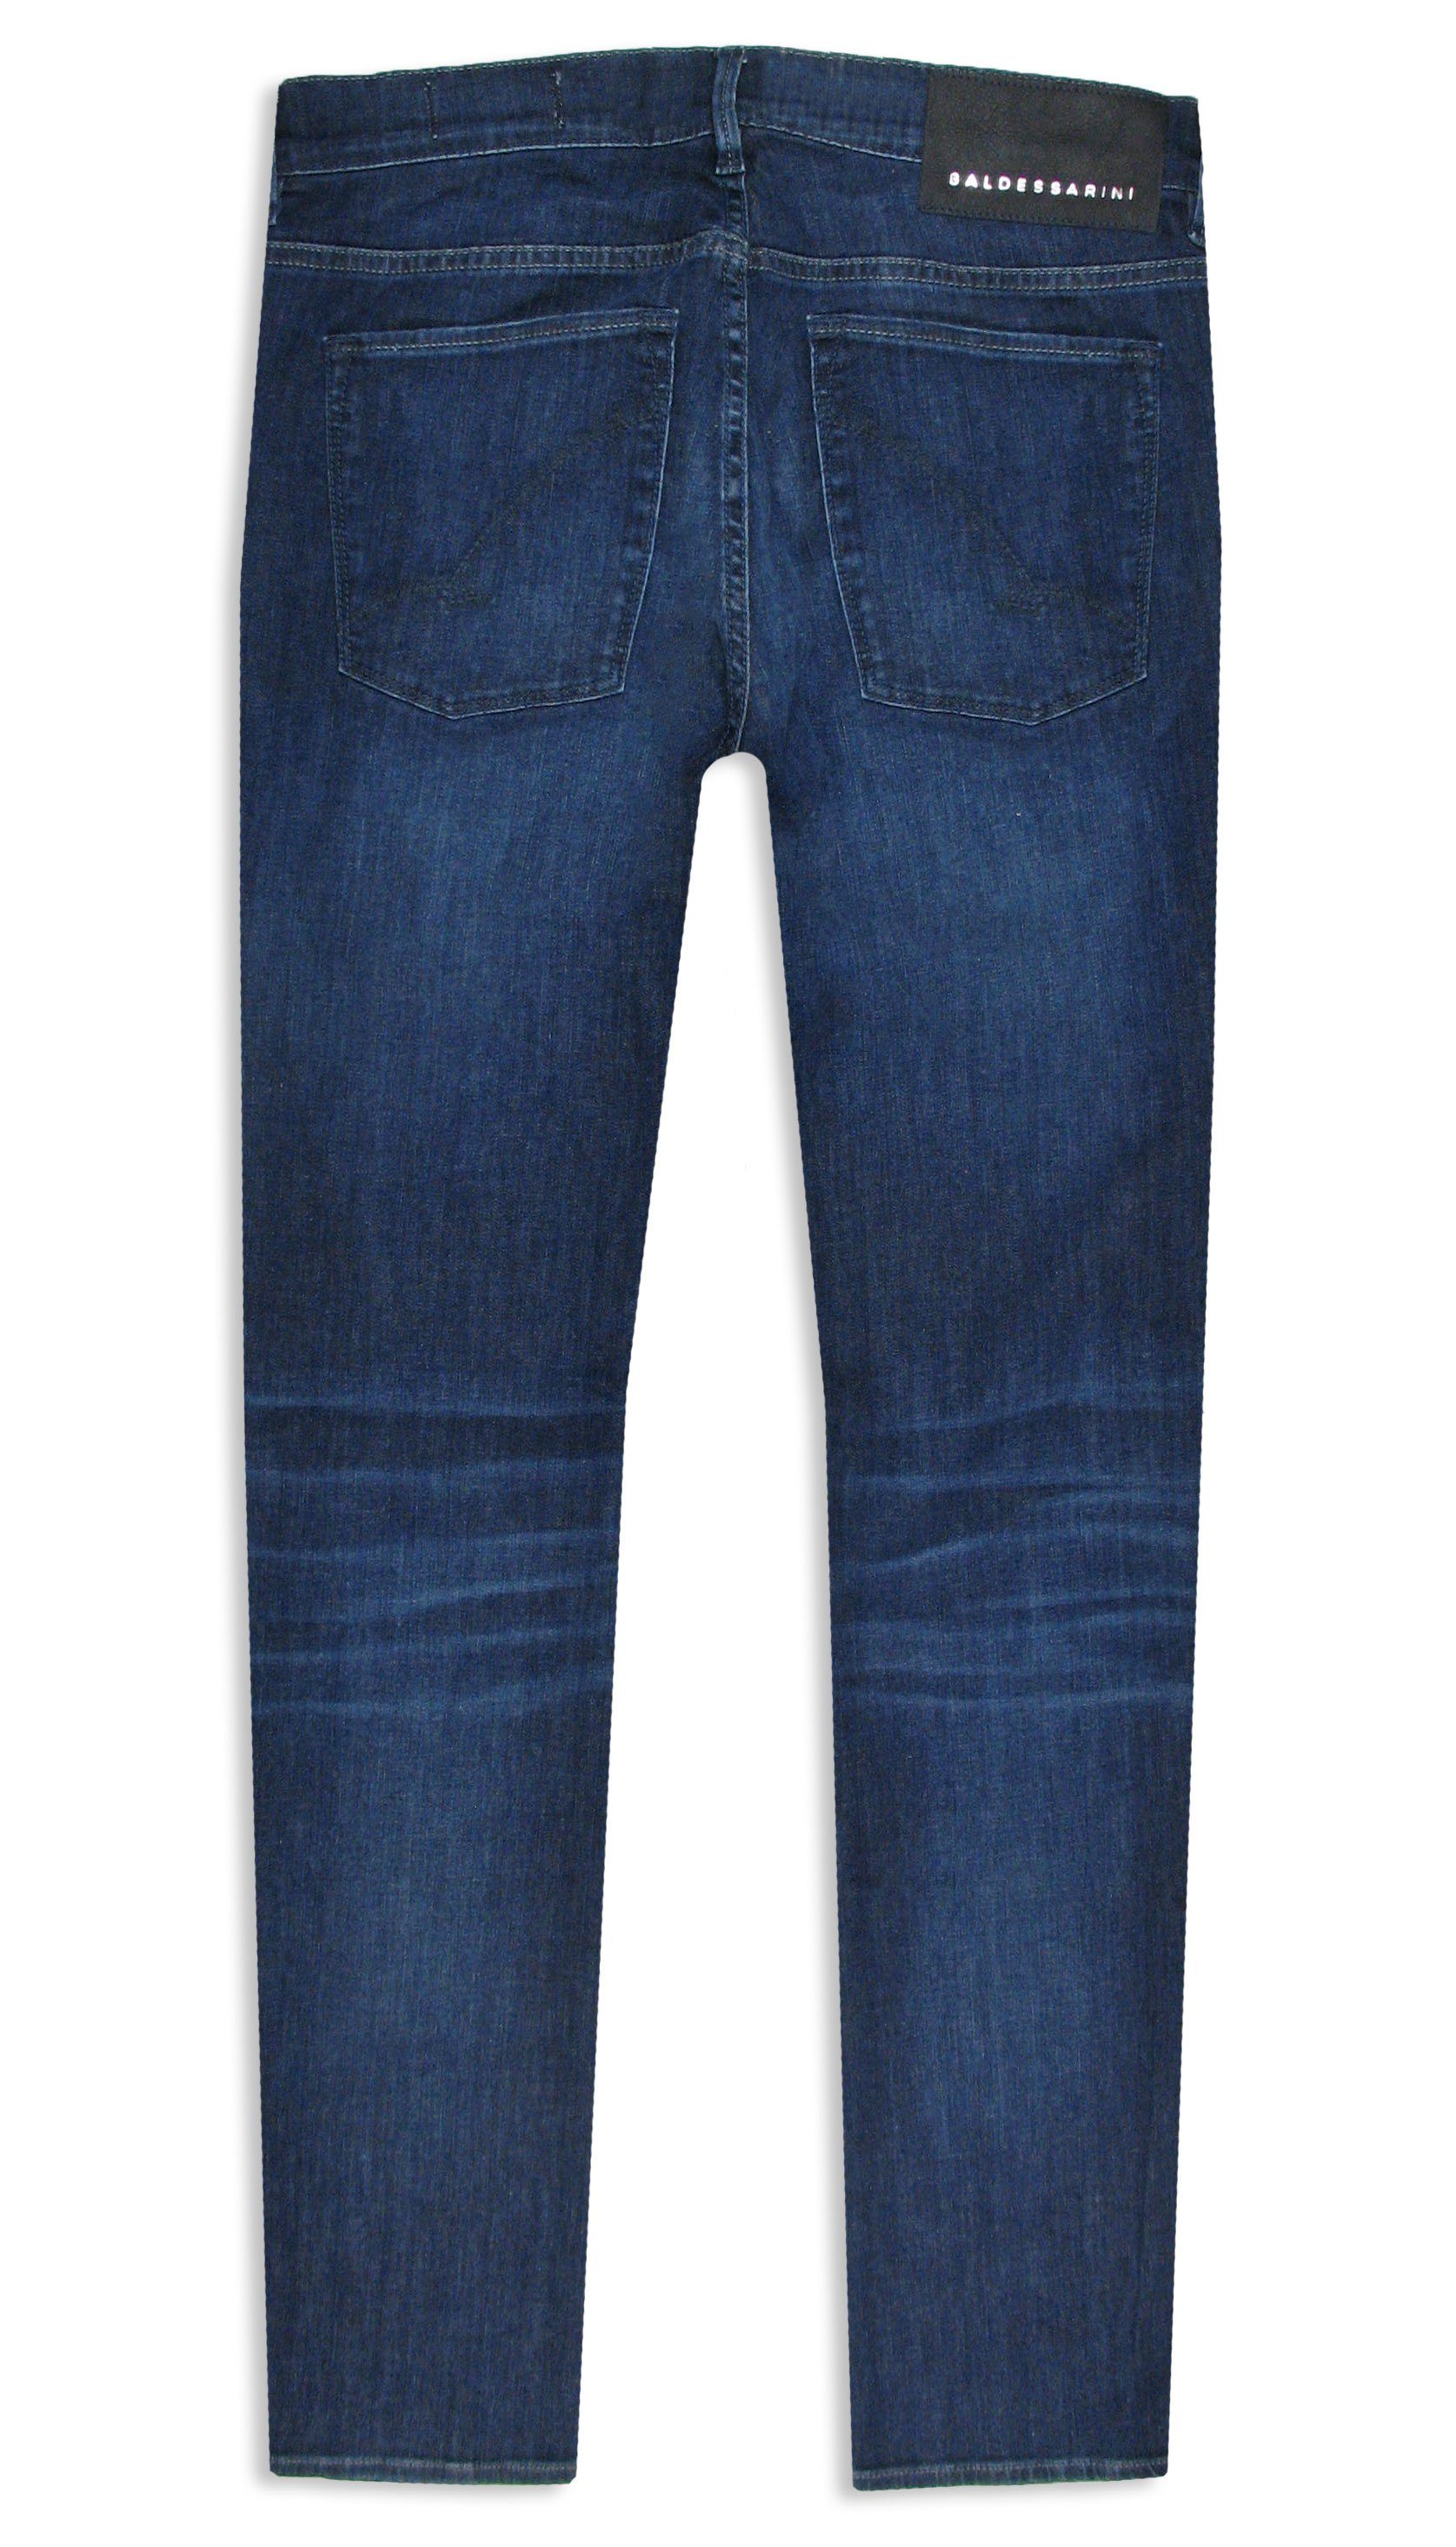 BALDESSARINI 5-Pocket-Jeans John Blue Stretch Used Denim Iconic Ocean